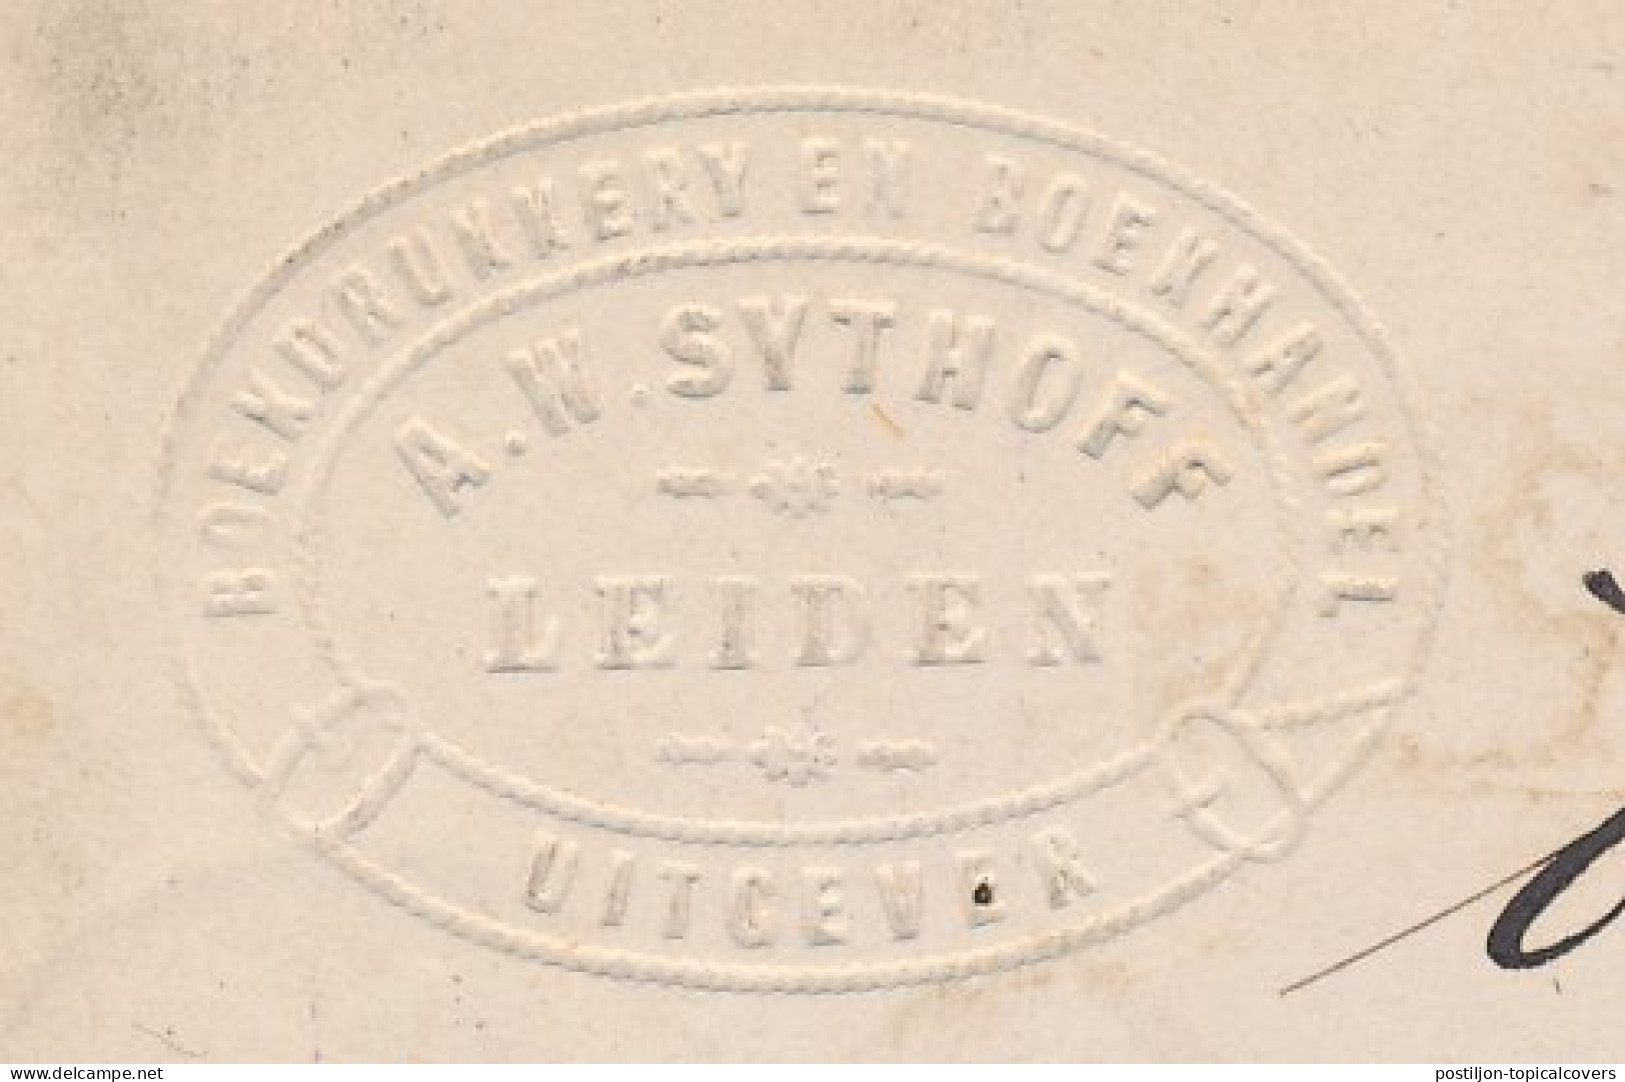 Briefkaart G. 23 Firma Blinddruk Leiden 1881 - Postwaardestukken